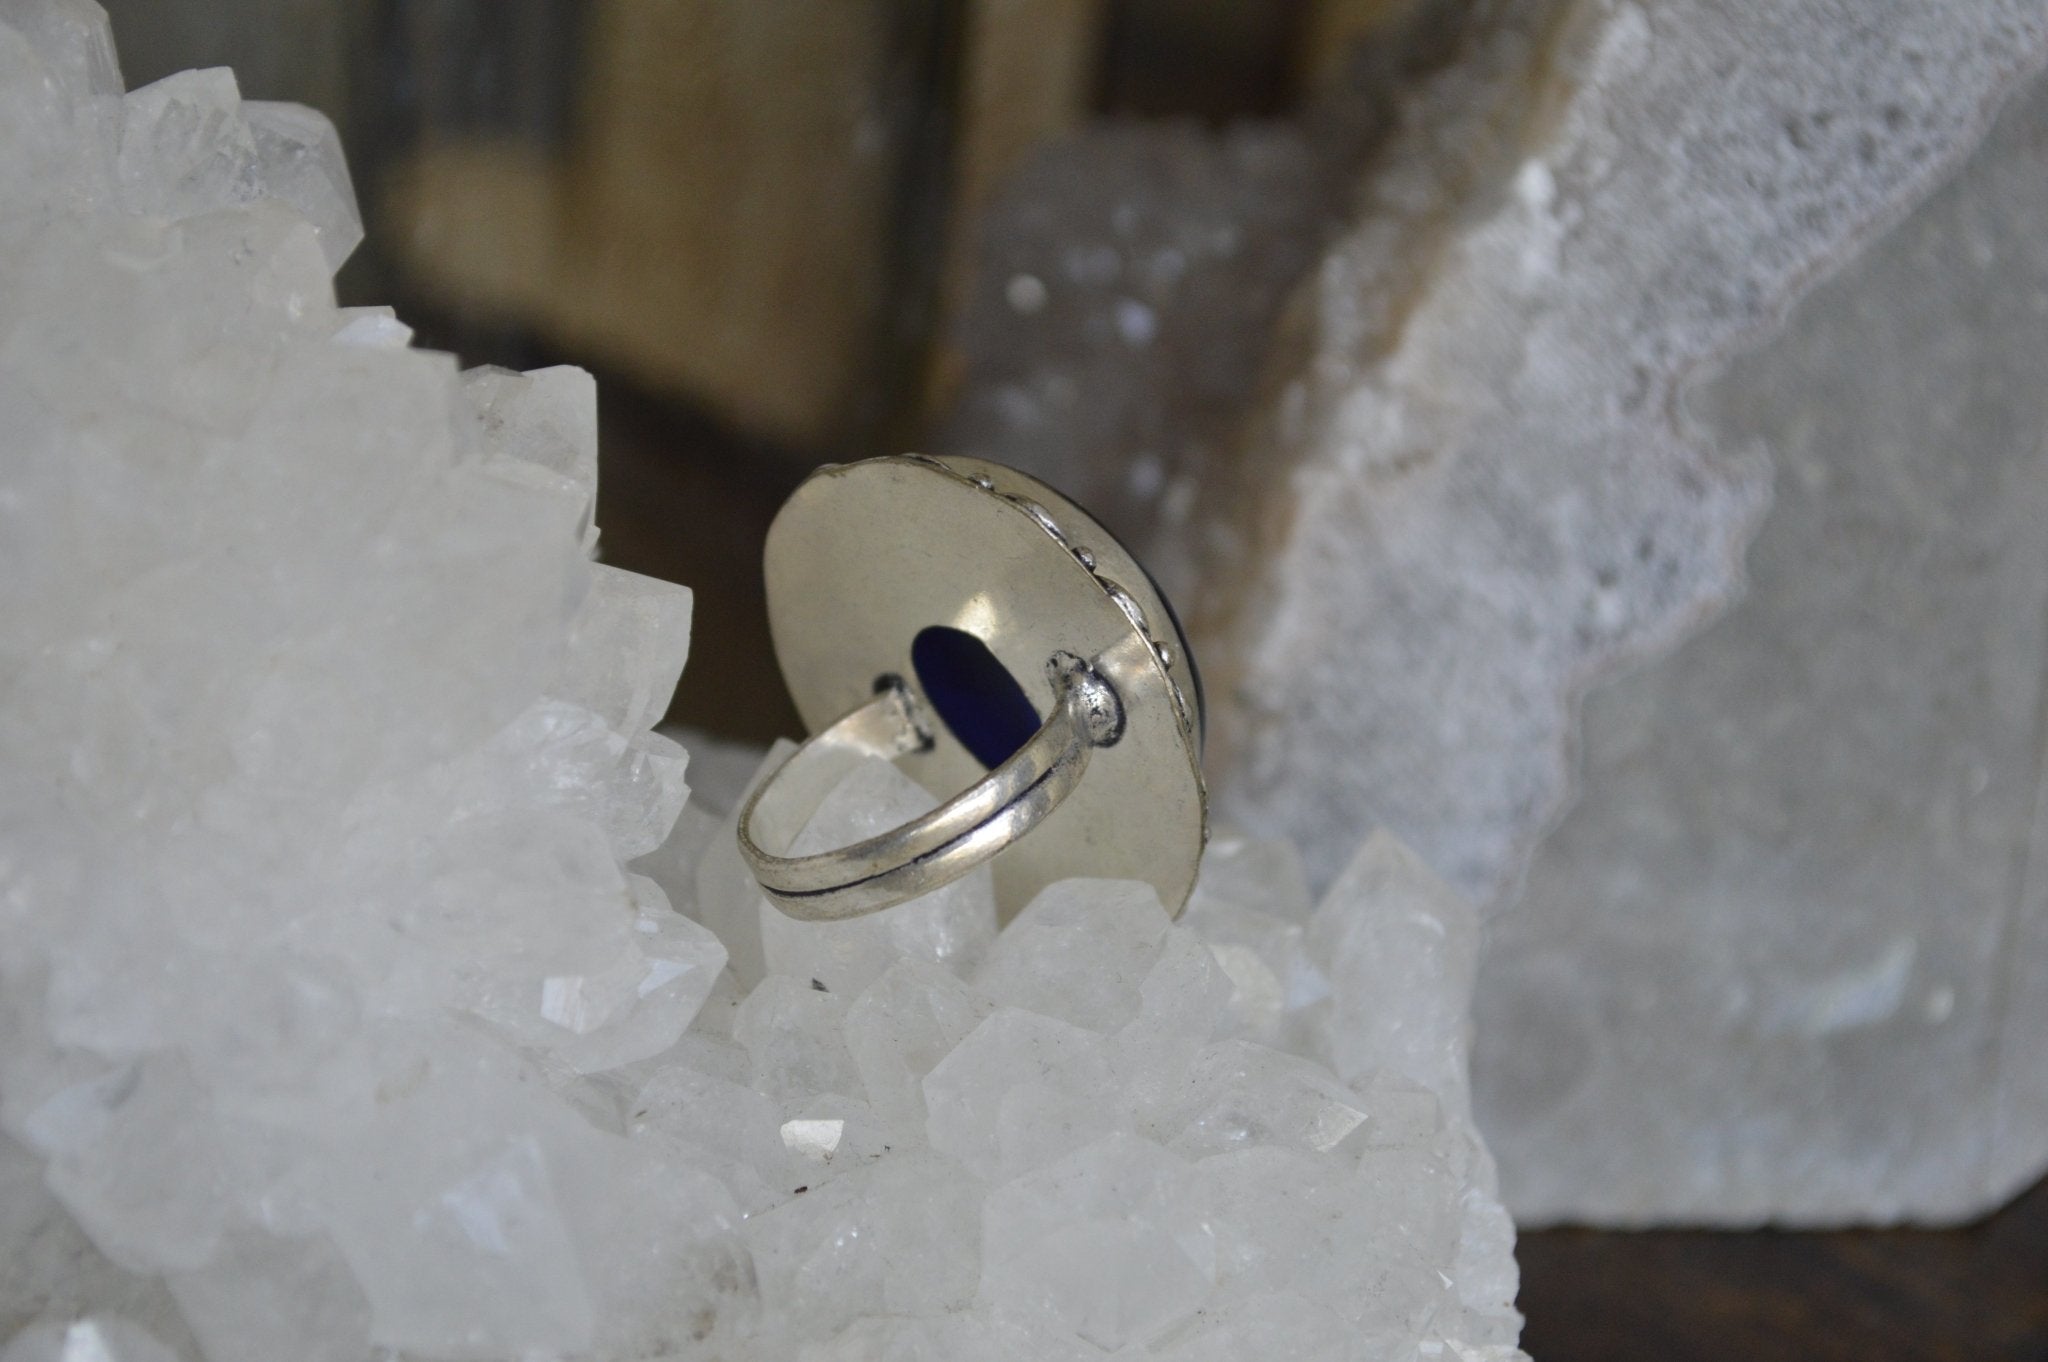 Blue Glass Spirit Ring - We Love Brass